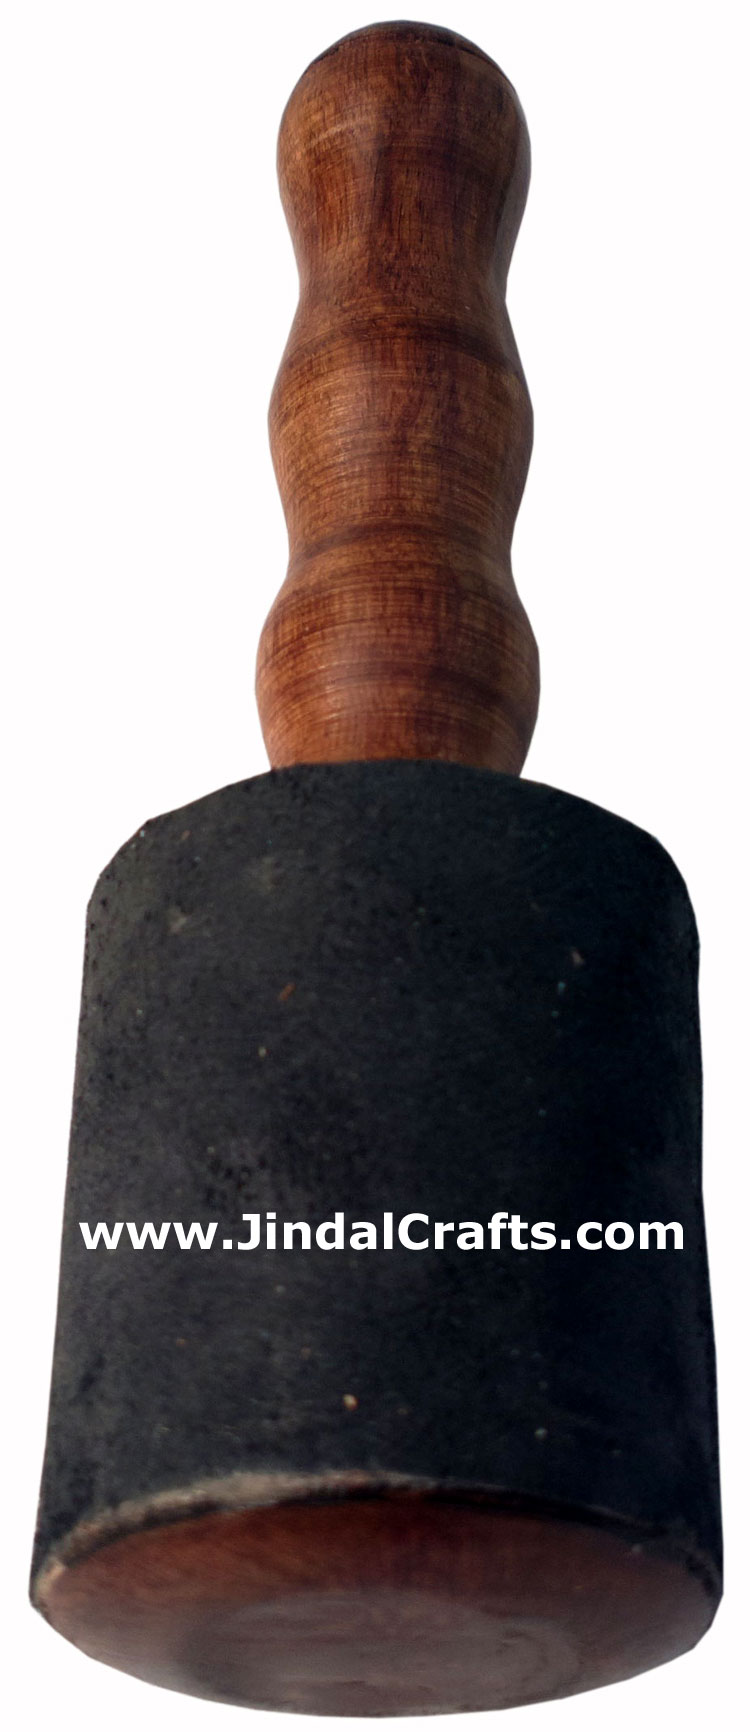 Tibetan Singing Bowl Beater - Indian Art Craft Handicraft Artifact